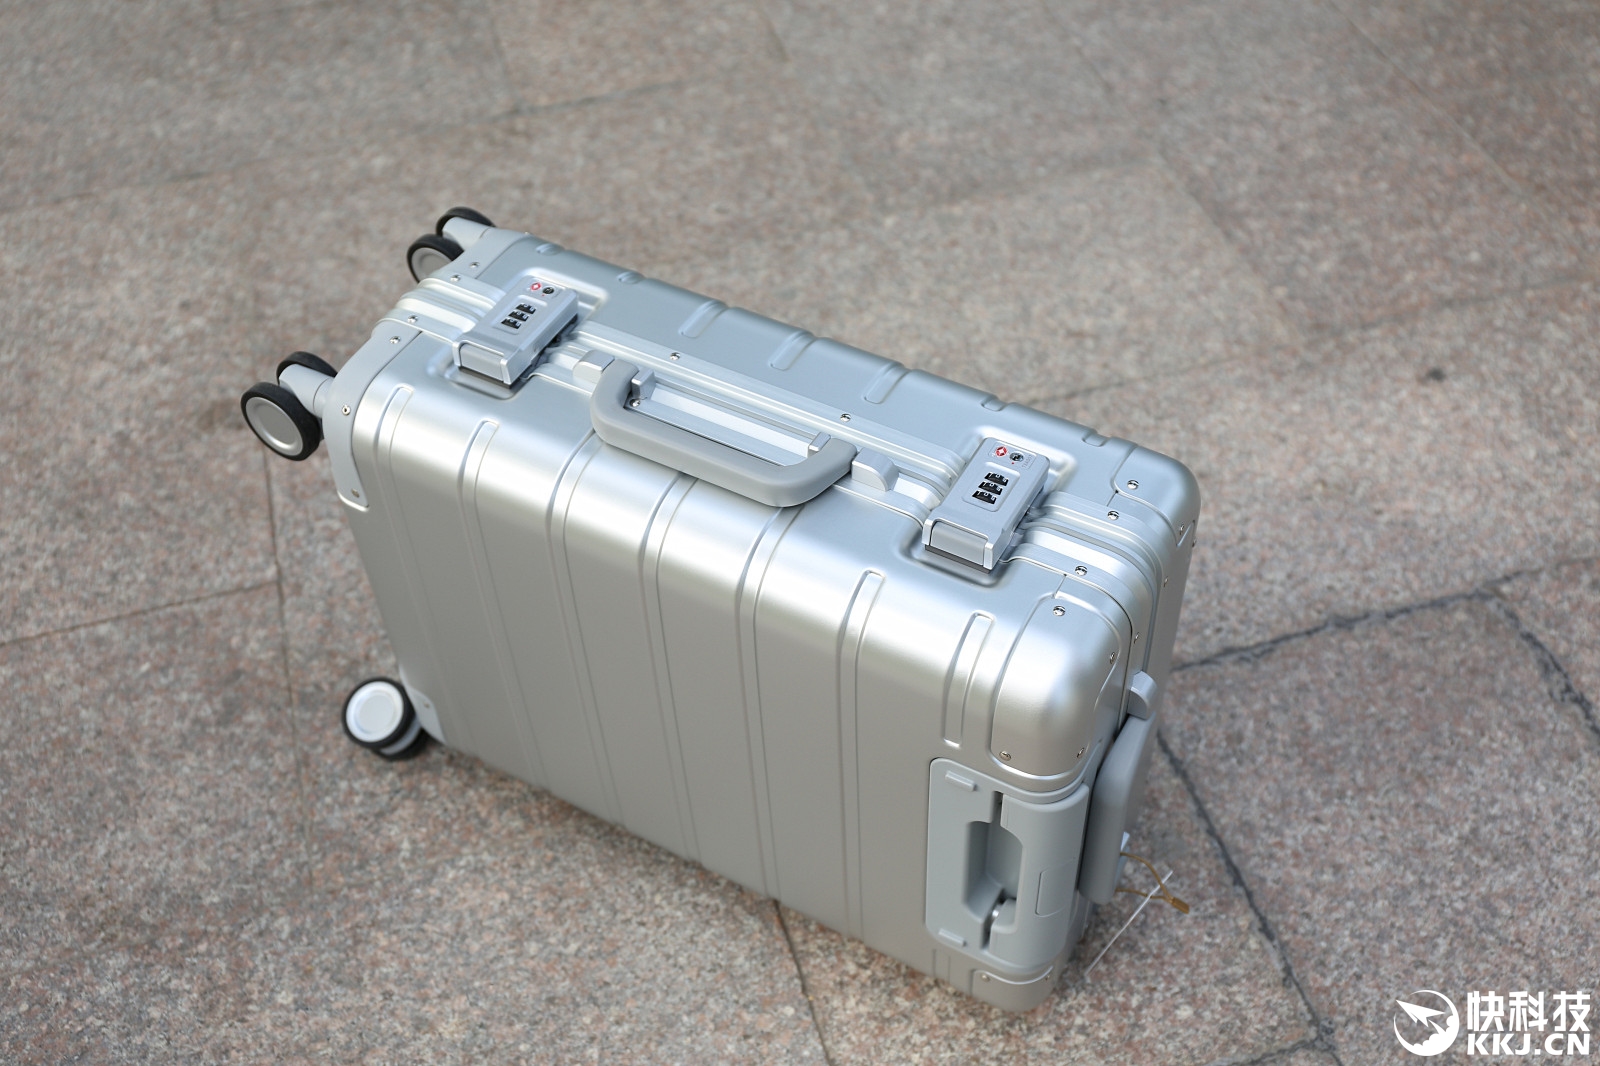 Xiaomi Mi Metal Suitcase 20